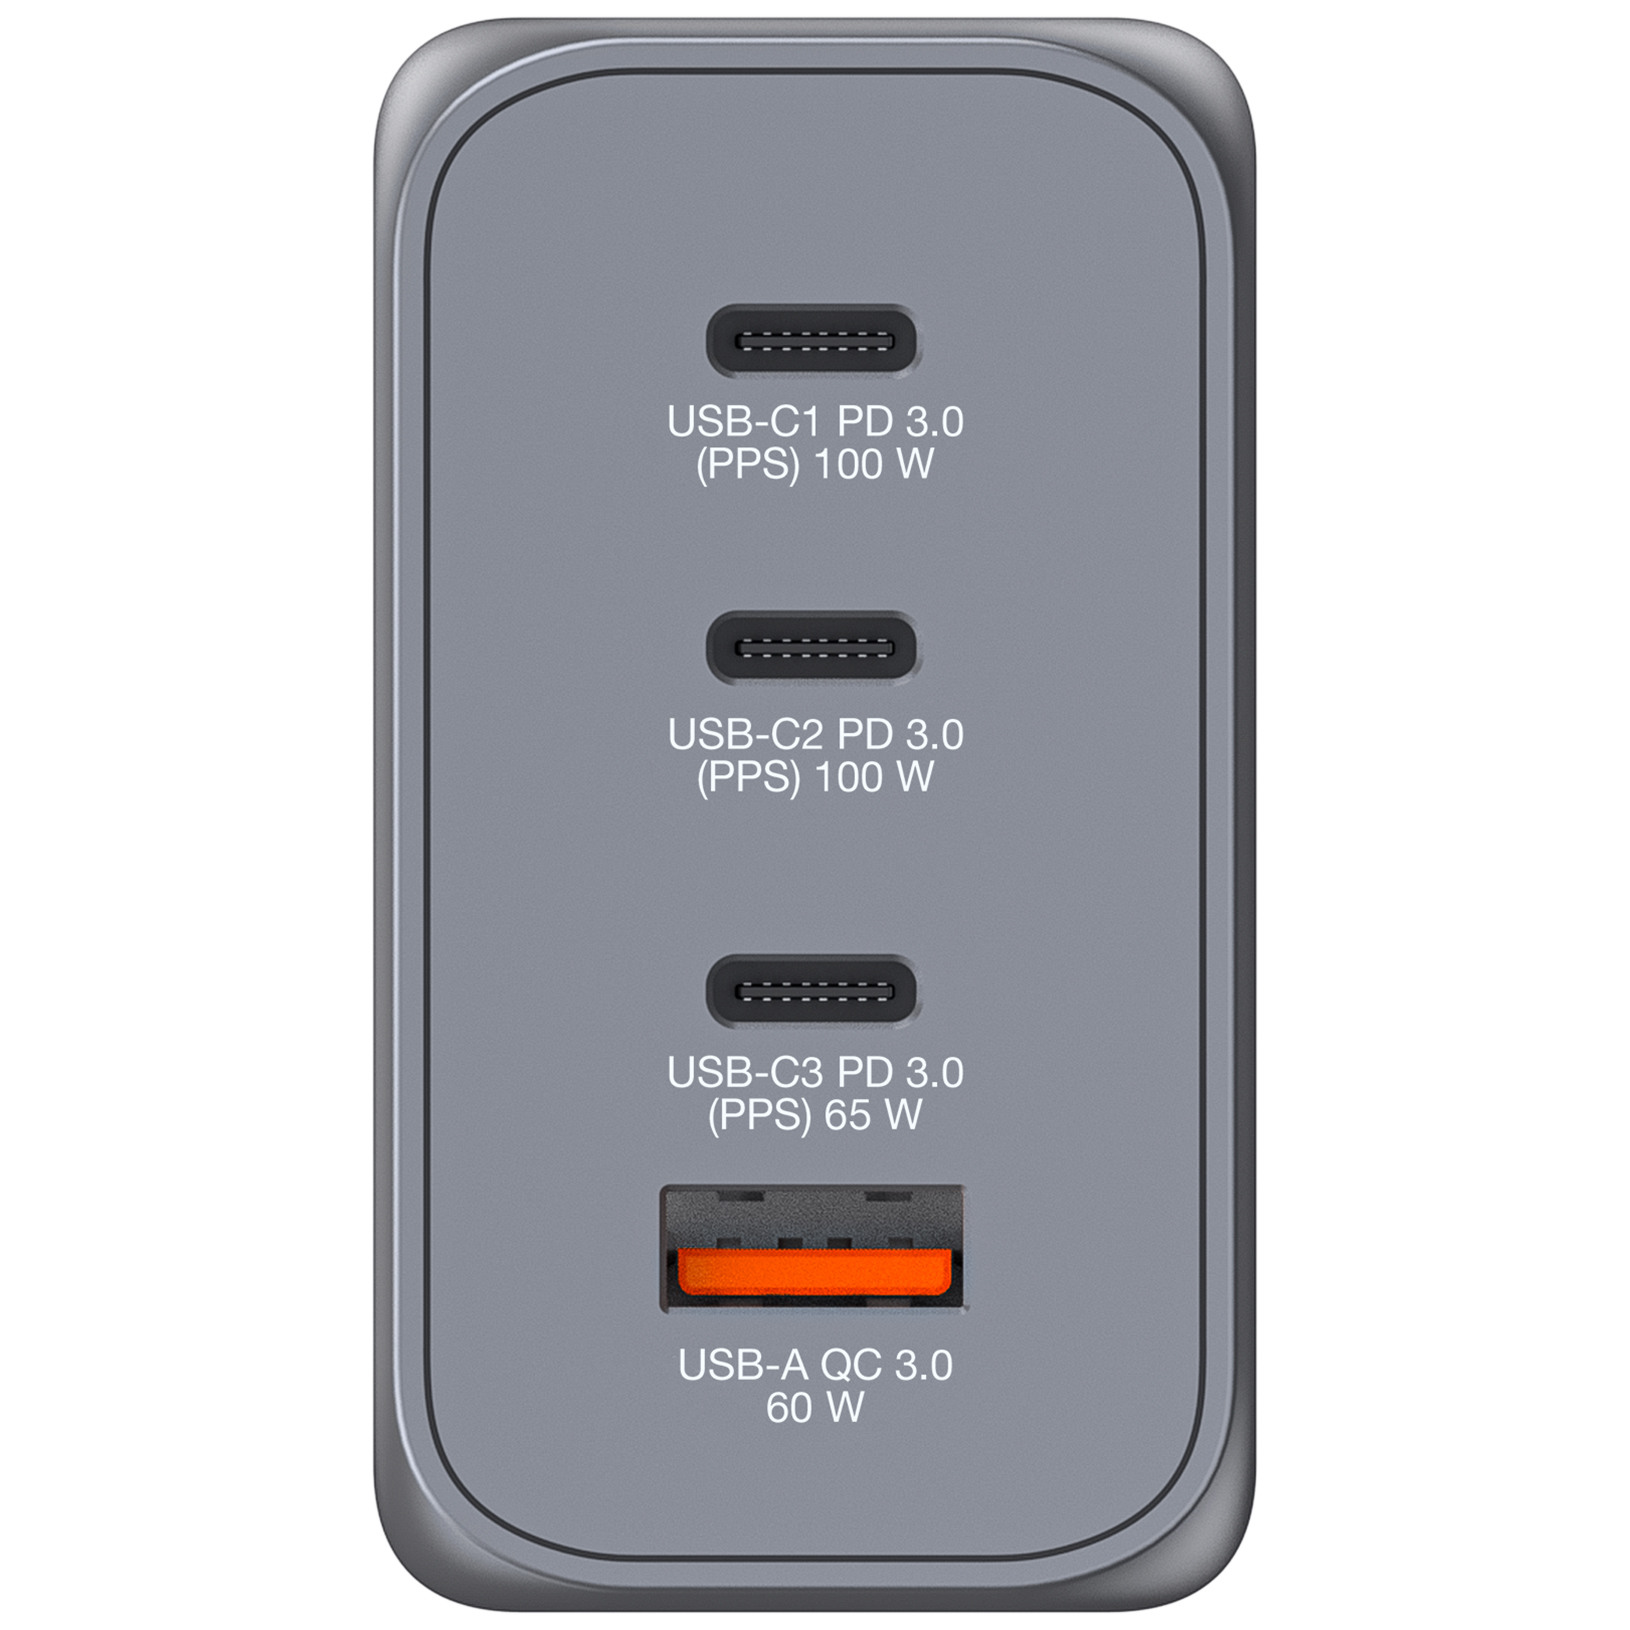 VERBATIM Charger 200W GaN grey 32204 3xUSB-C 1xUSB-A +Adapter UK/US